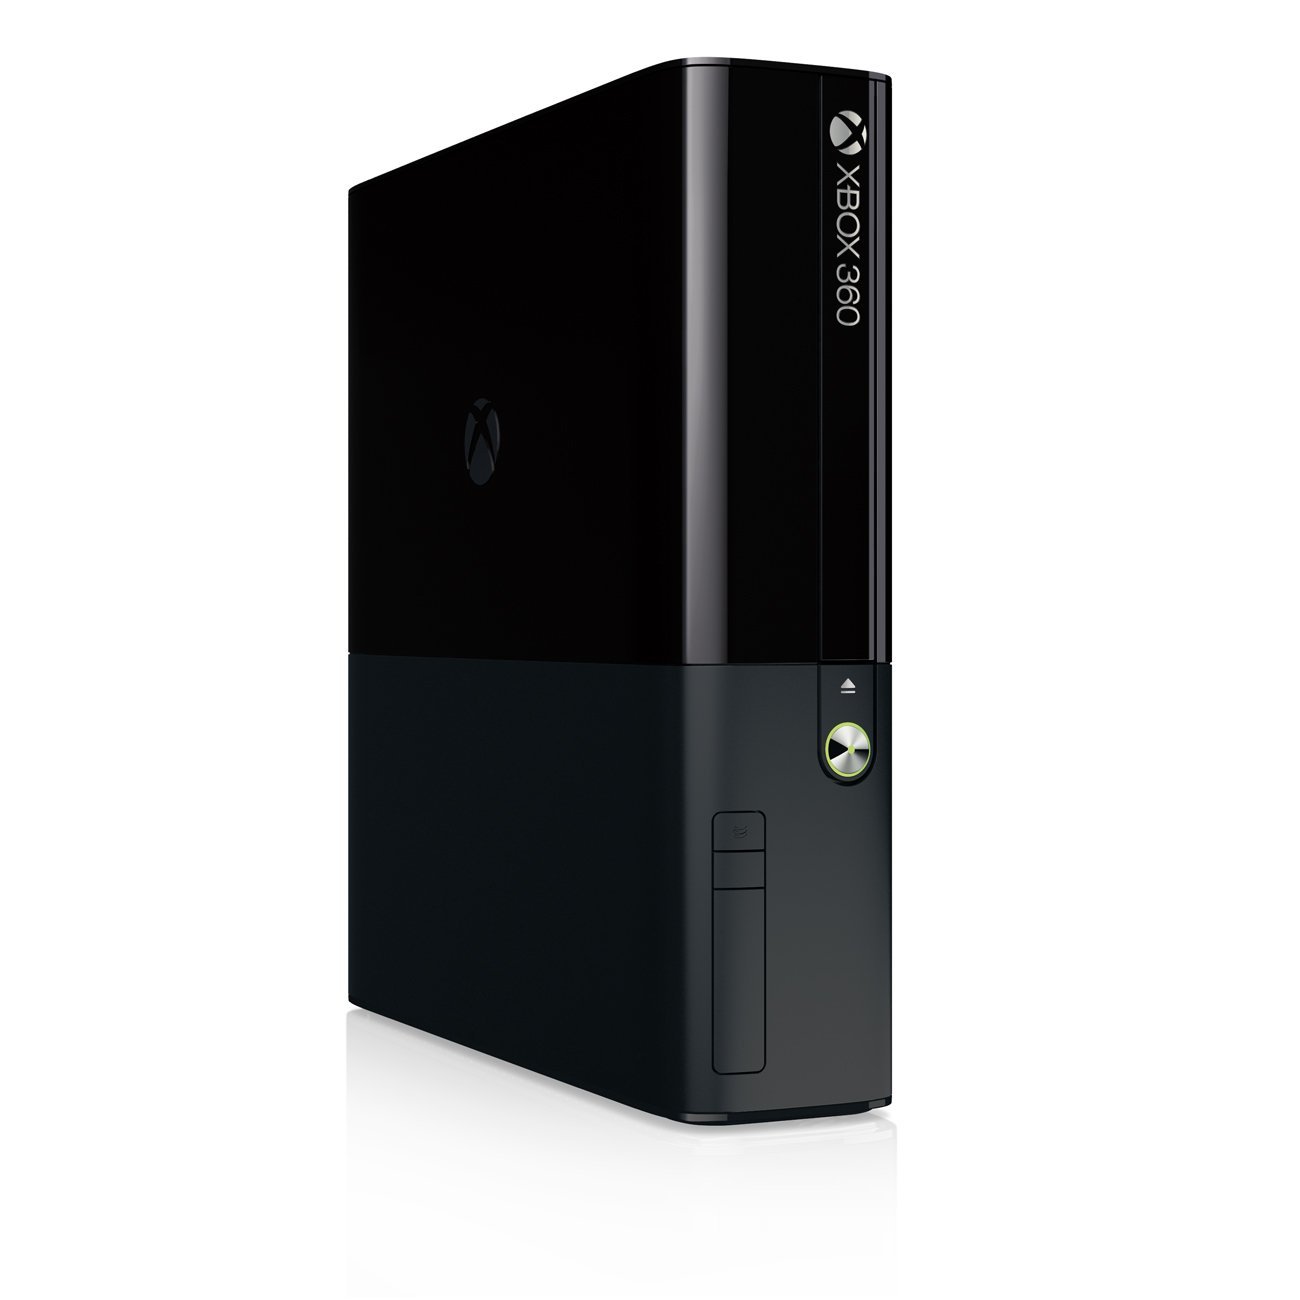 Microsoft Xbox 360 4GB Console - image 4 of 6